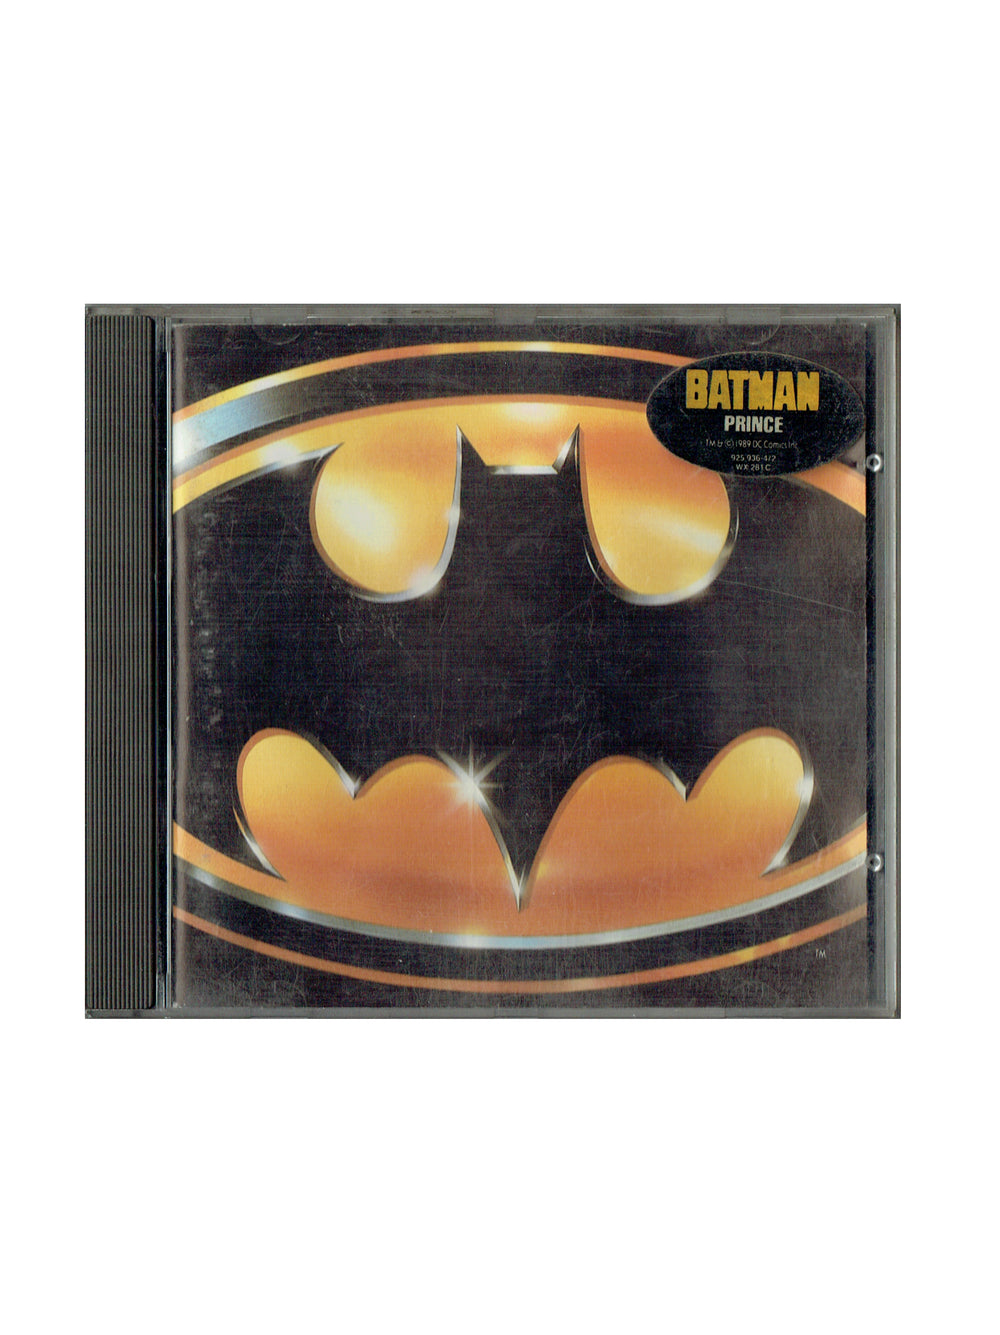 Prince Batman Soundtrack CD Album 1989 Original Release 9 Tracks With Hype